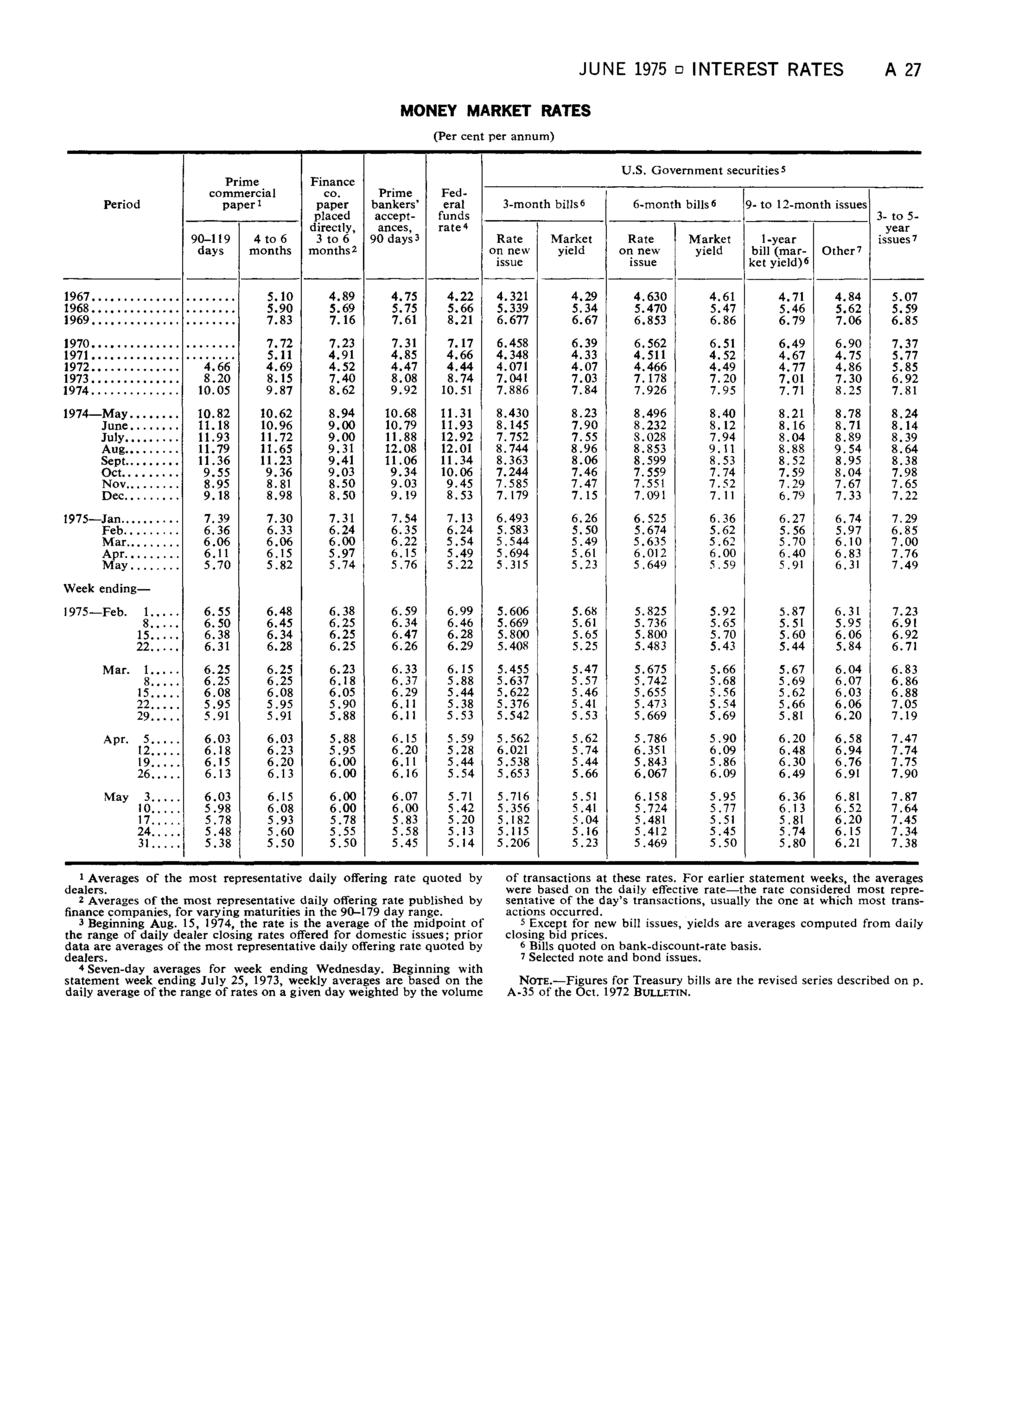 MONEY MARKET RATES (Per cent per annum) JU N E 1975 INTEREST RATES A 27 Period Prime commercial paper1 90-119 days 4 to 6 months Finance CO.